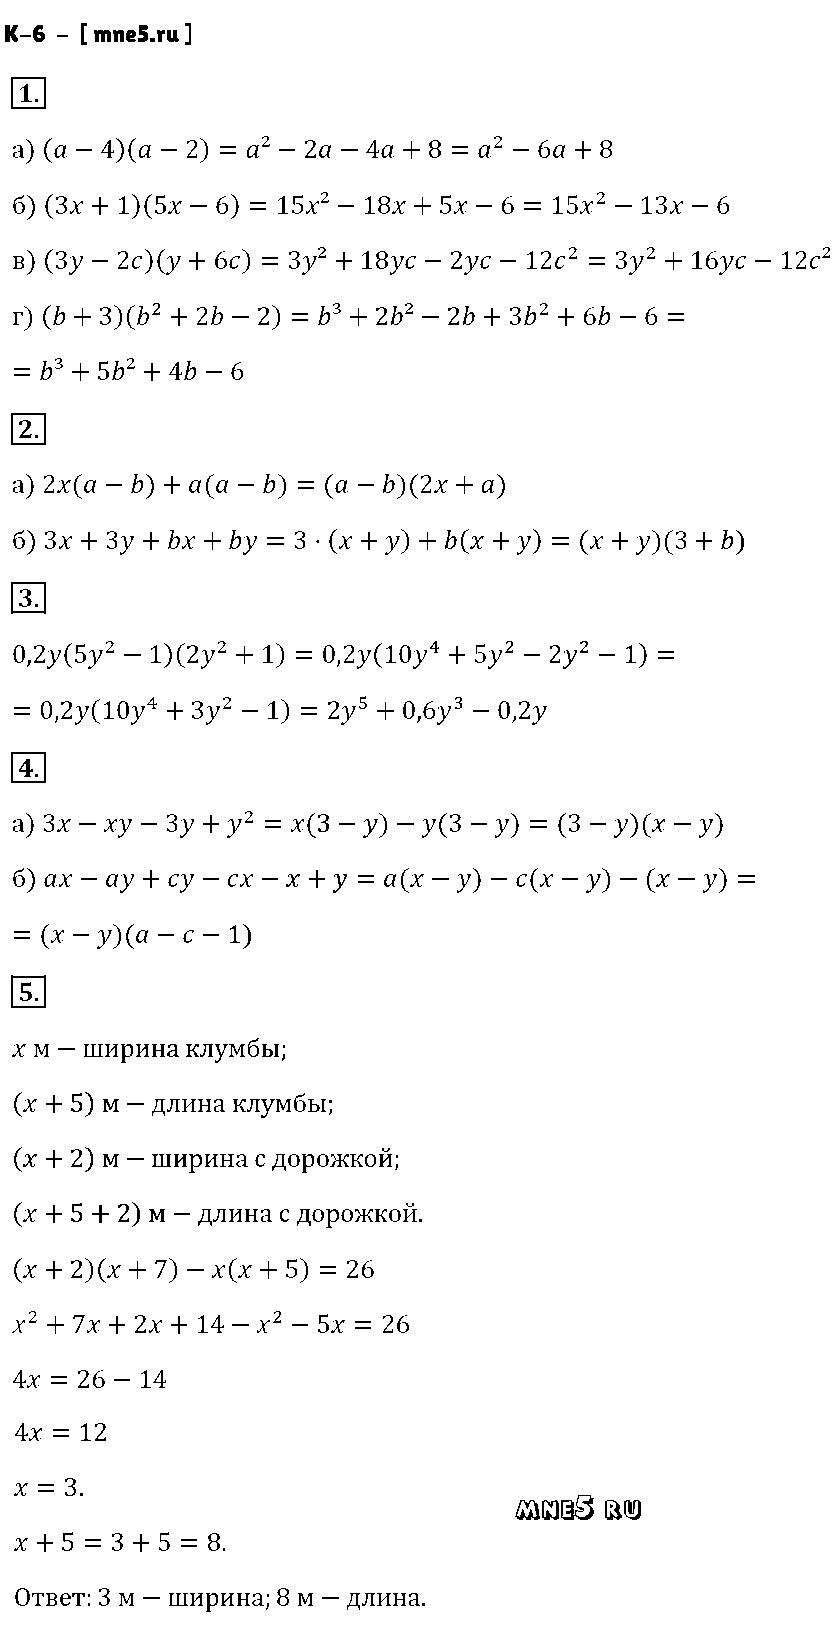 ГДЗ Алгебра 7 класс - К-6